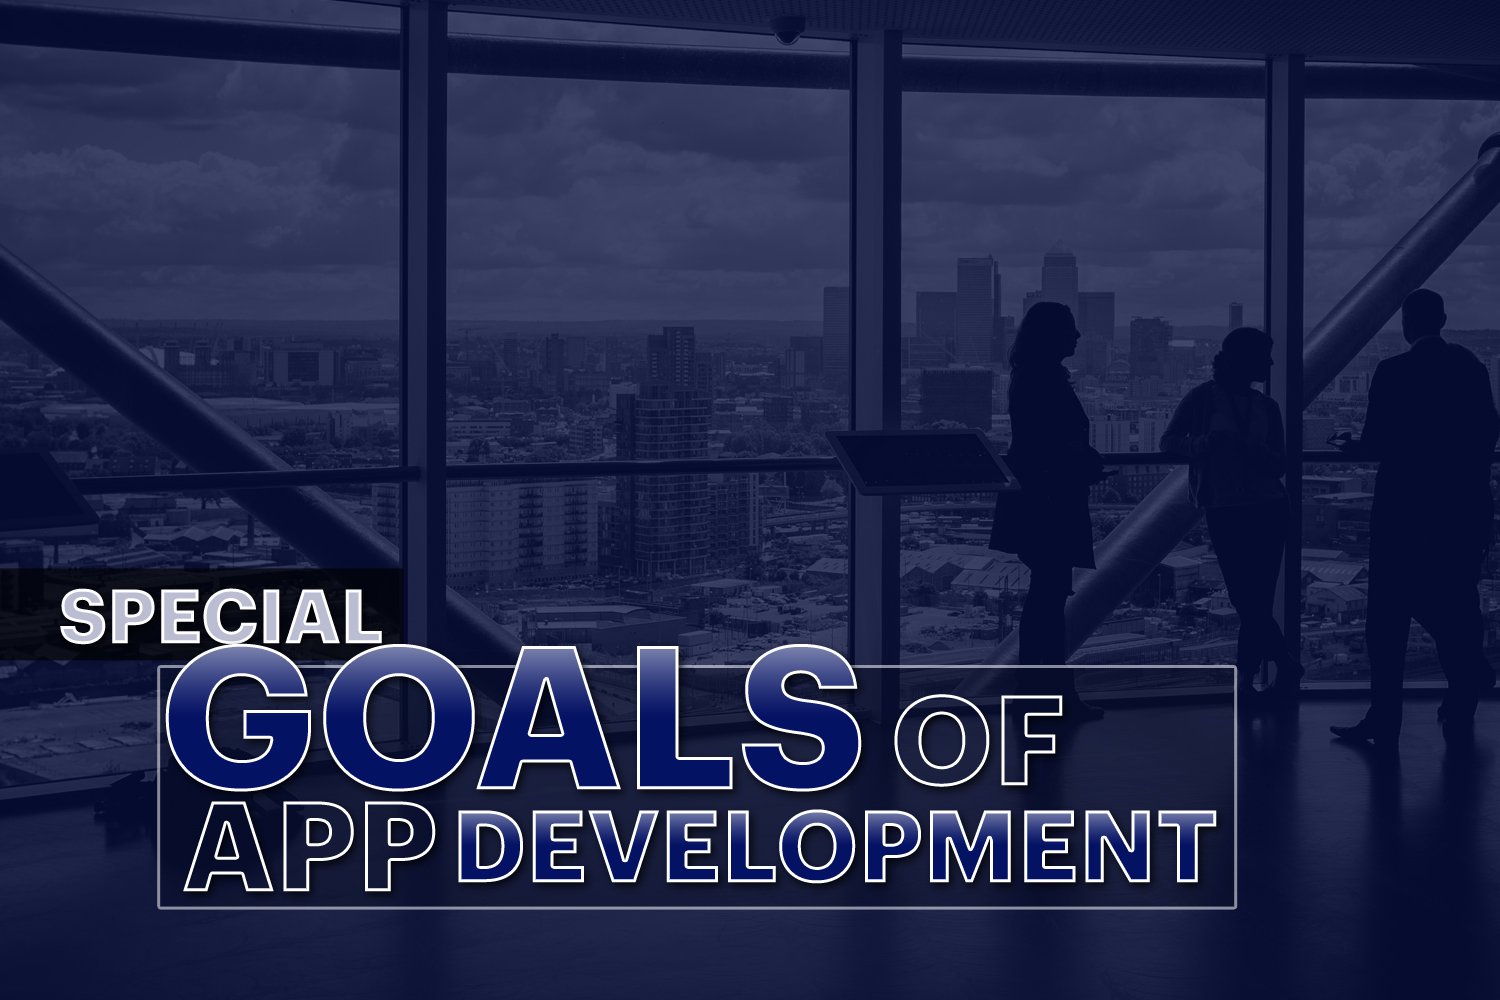 App development goals for marketing